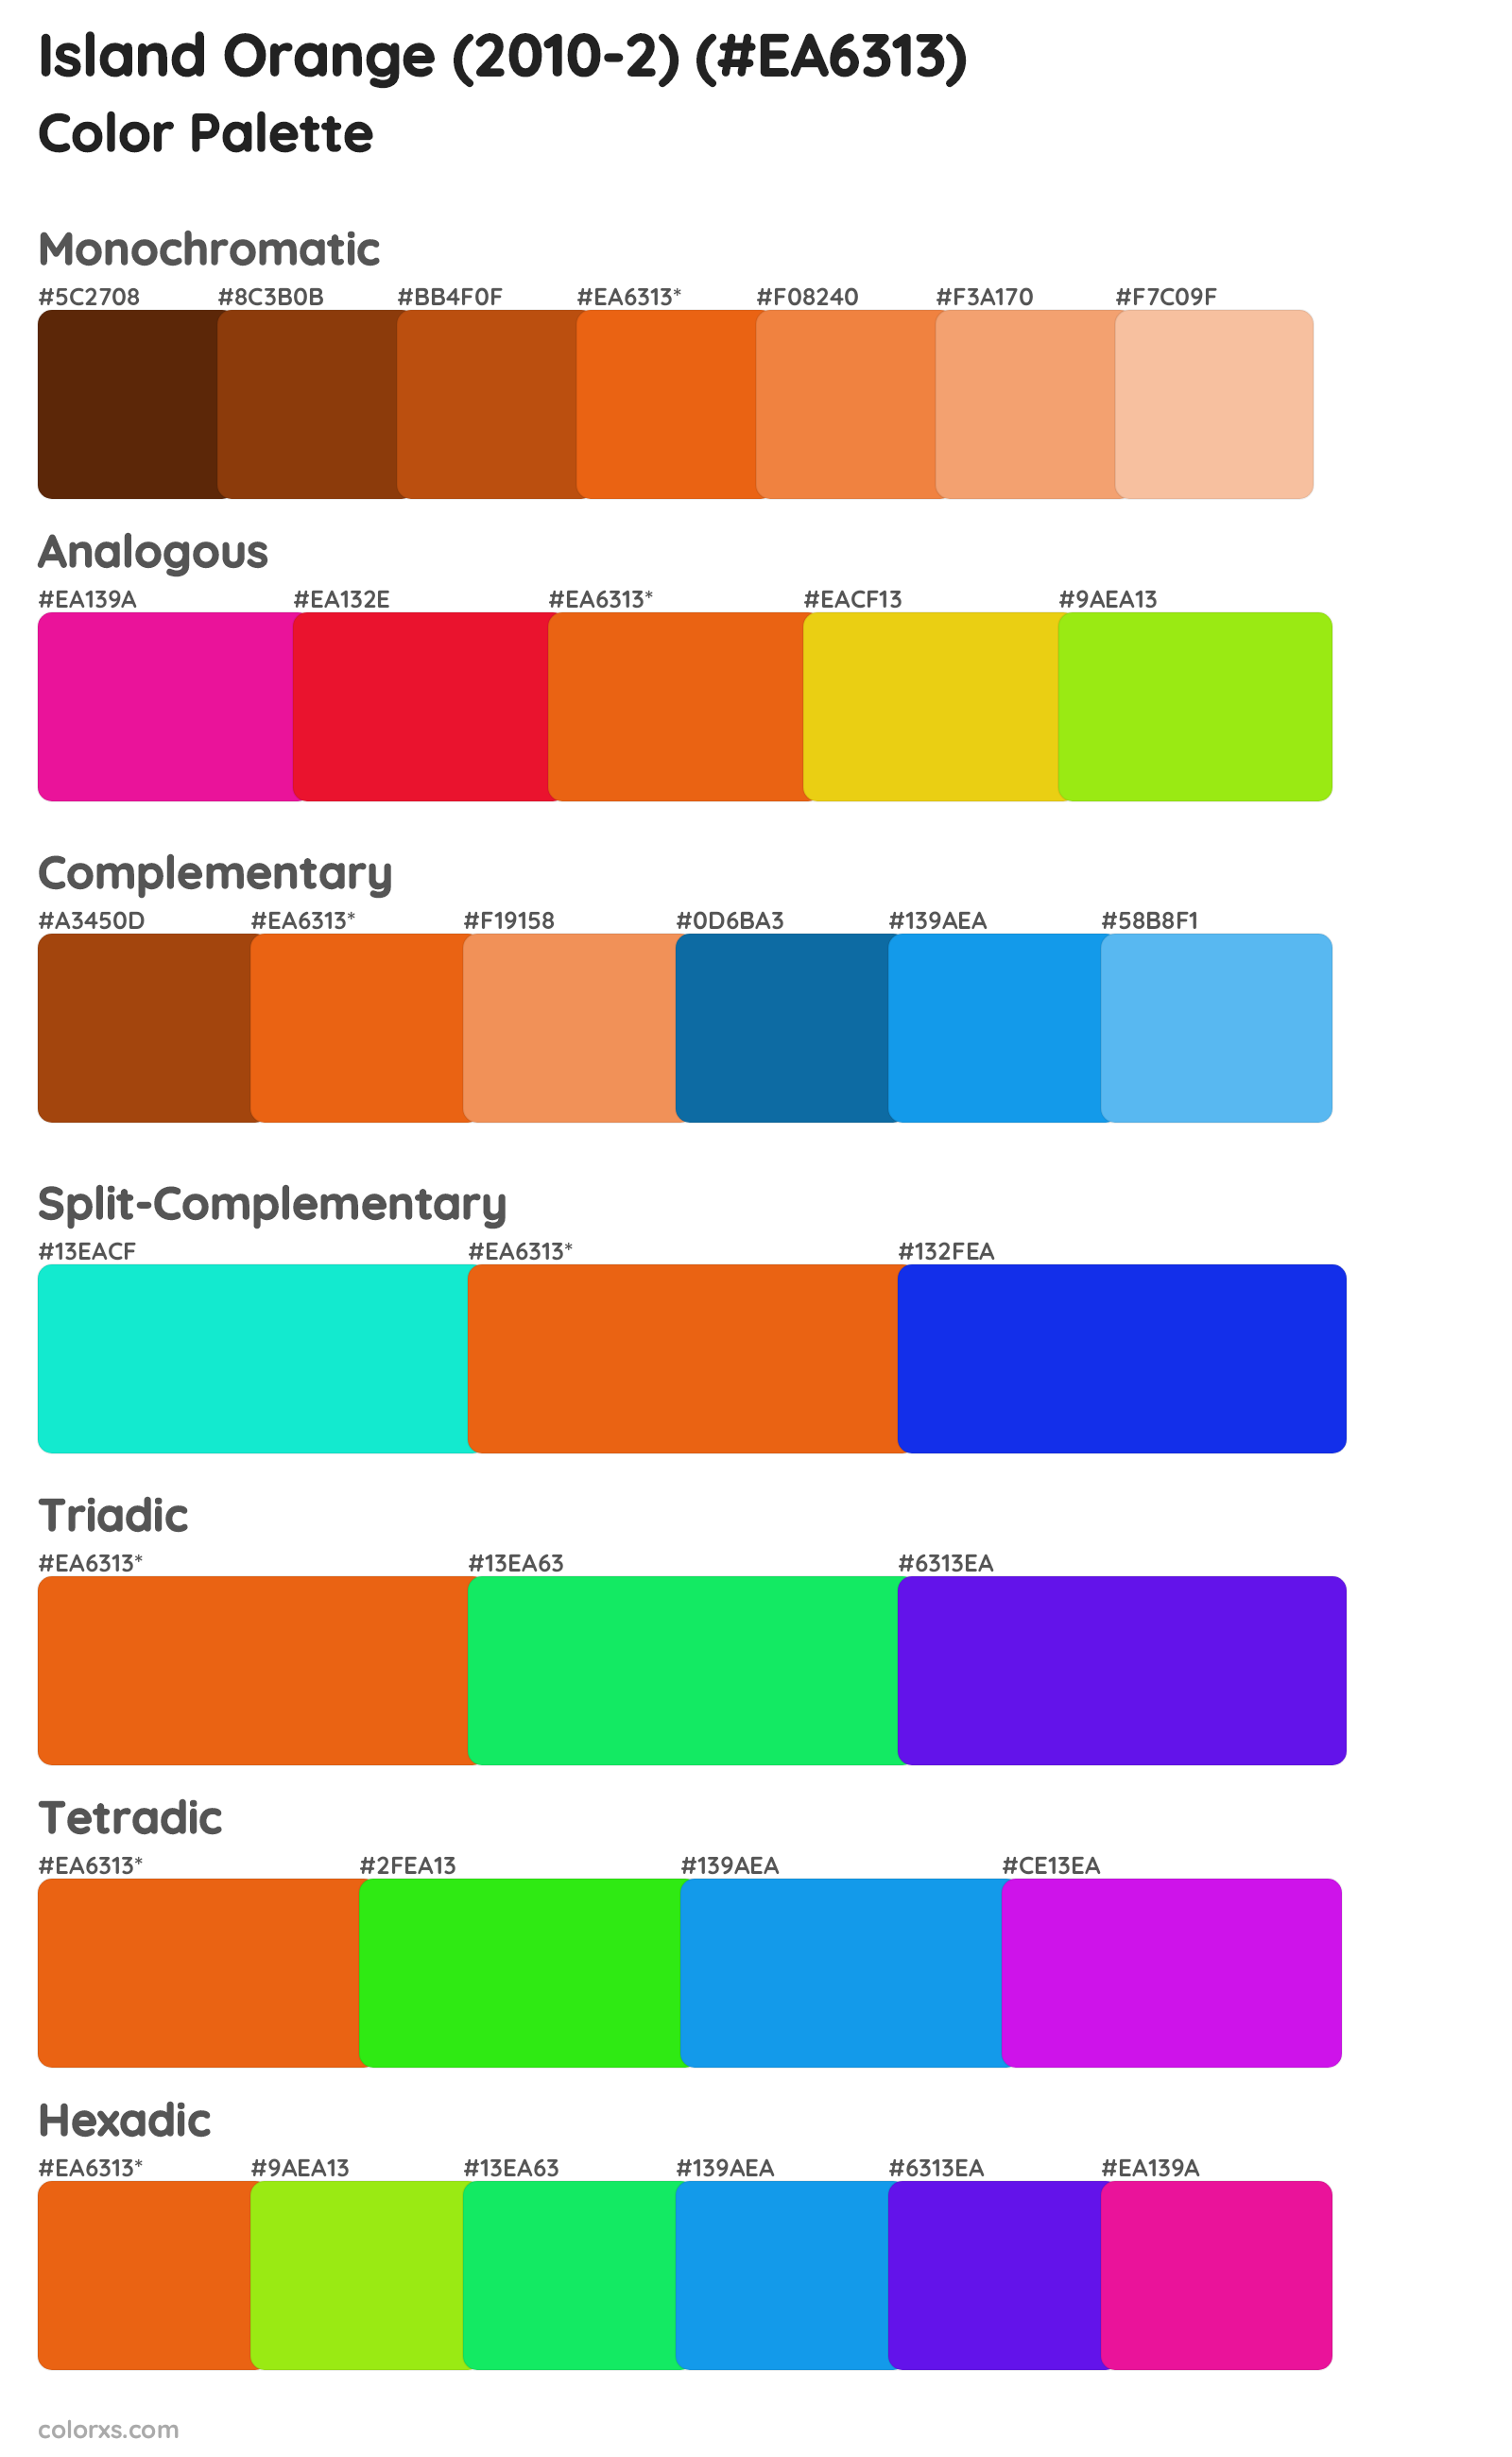 Island Orange (2010-2) Color Scheme Palettes